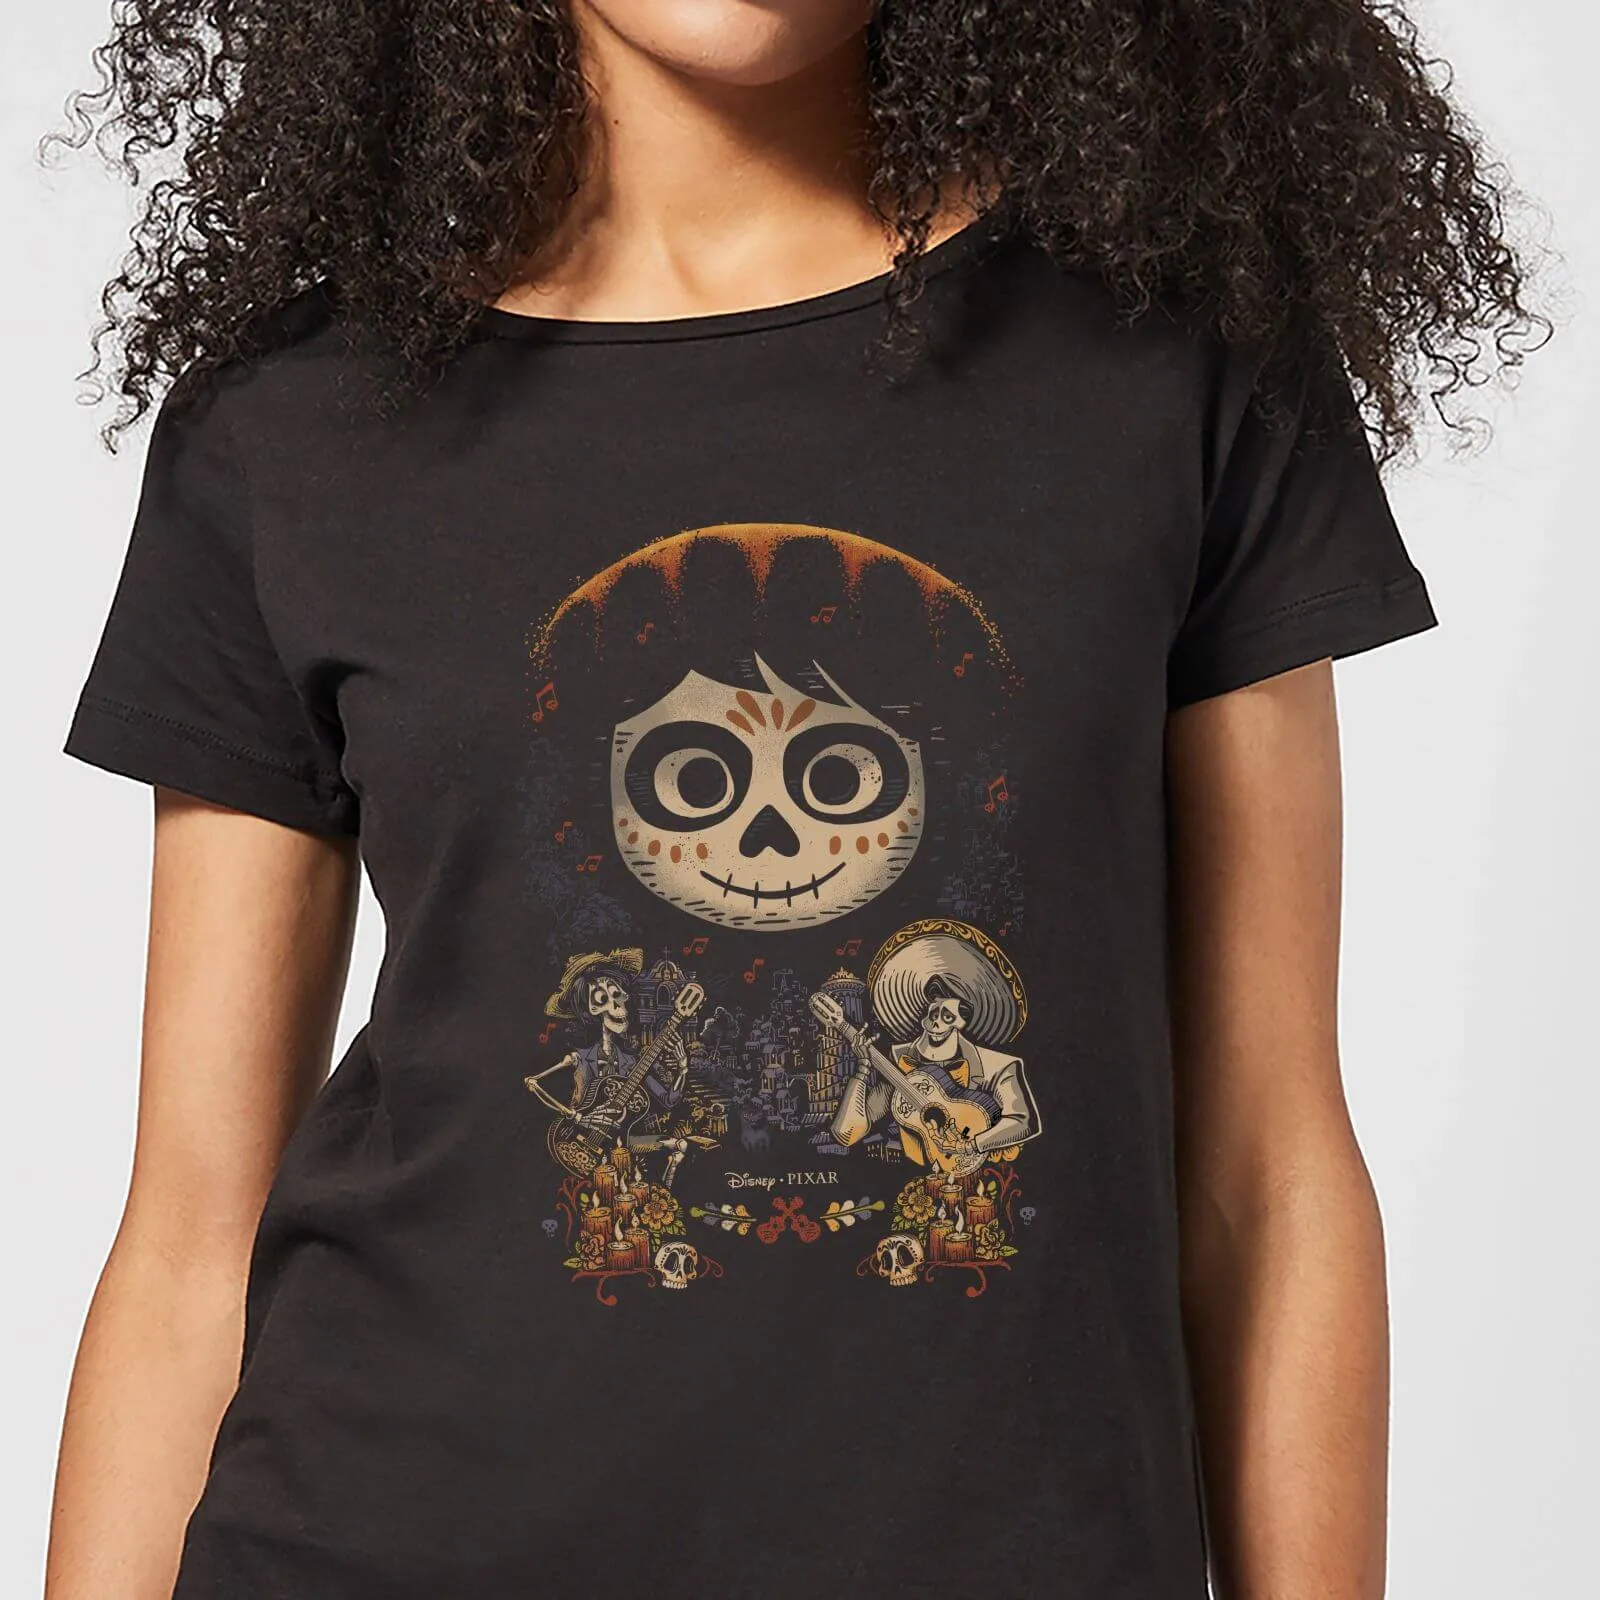 Coco Miguel Face Poster Women's T-Shirt - Black - M